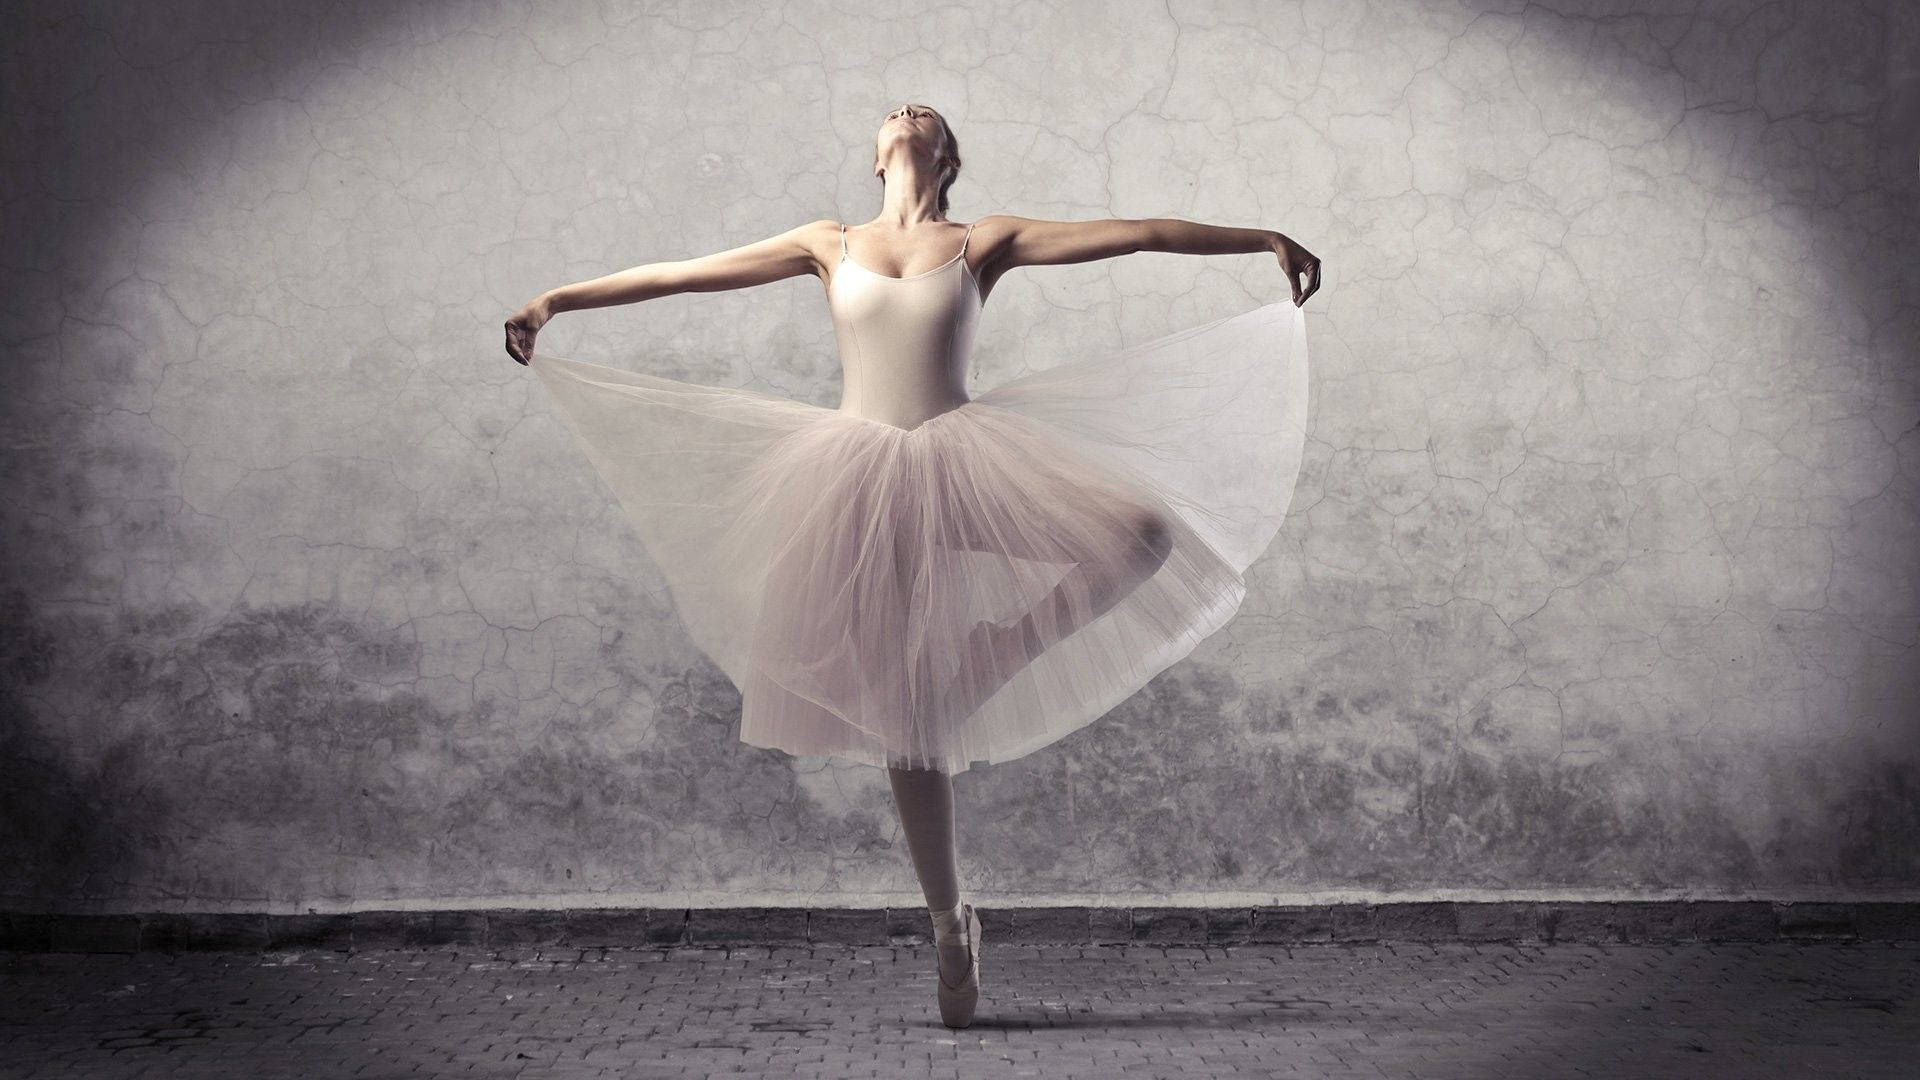 Caption: "Graceful Ballet Dancer Pirouetting in Elegance" Wallpaper